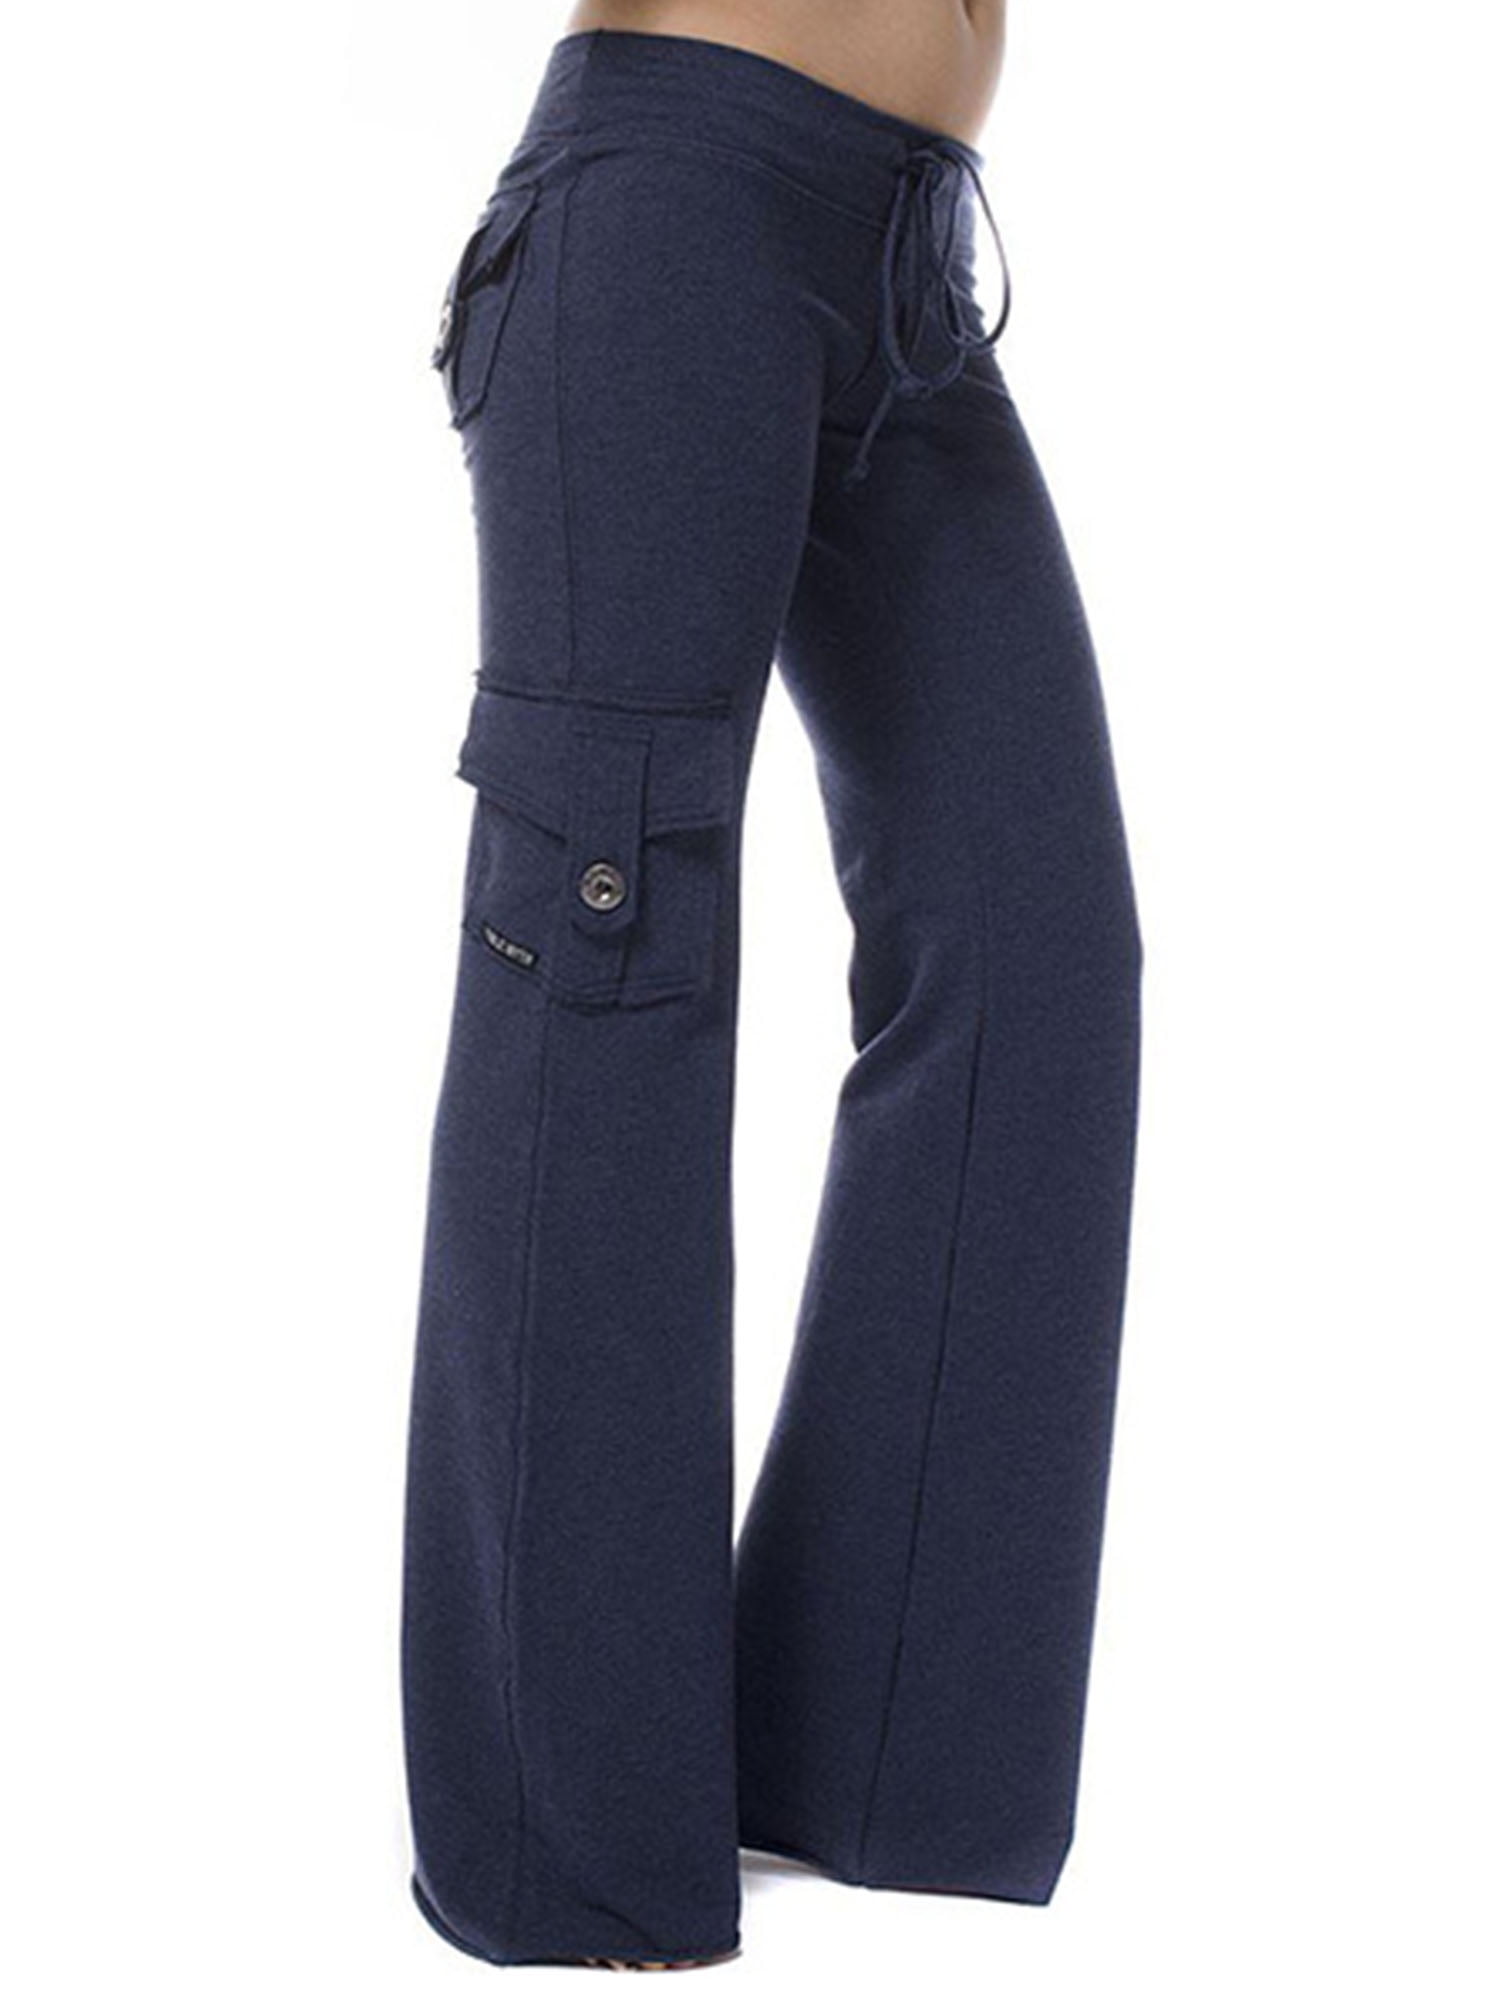 Avamo Women Bootcut Yoga Pants Leggings with Pockets Plus Size Stretch ...